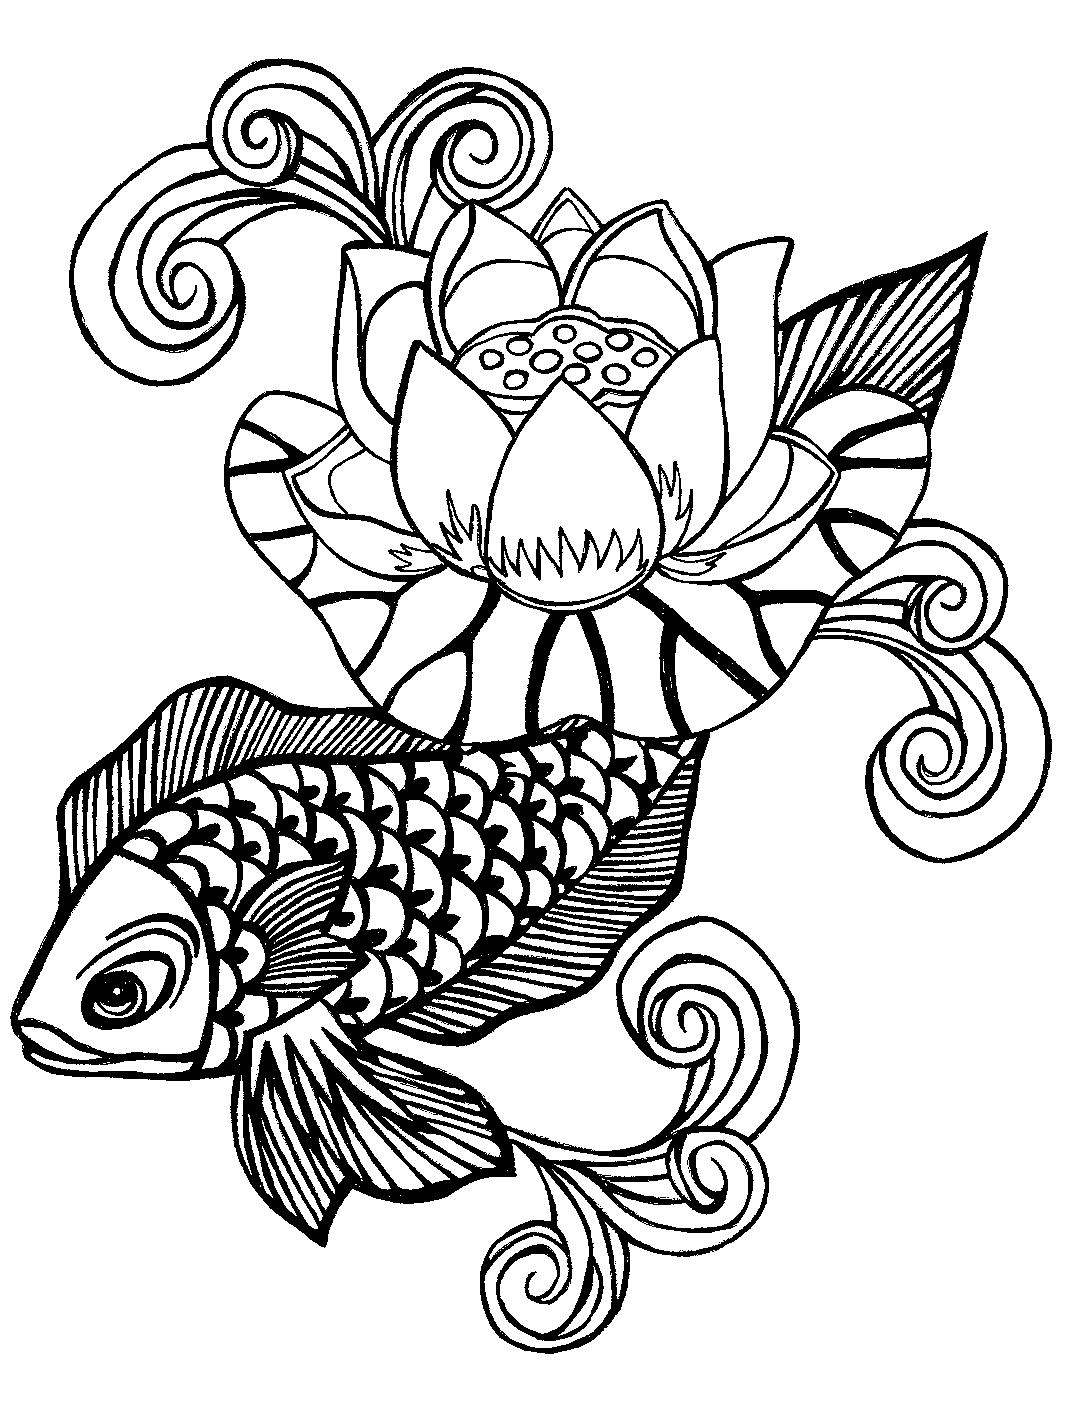 Premium Vector | Lotus tattoo design creative bohemian lotos flowers tattoos  modern zen mandala ornament henna ornate drawing templates tidy vector  floral design of tattoo lotus creative illustration